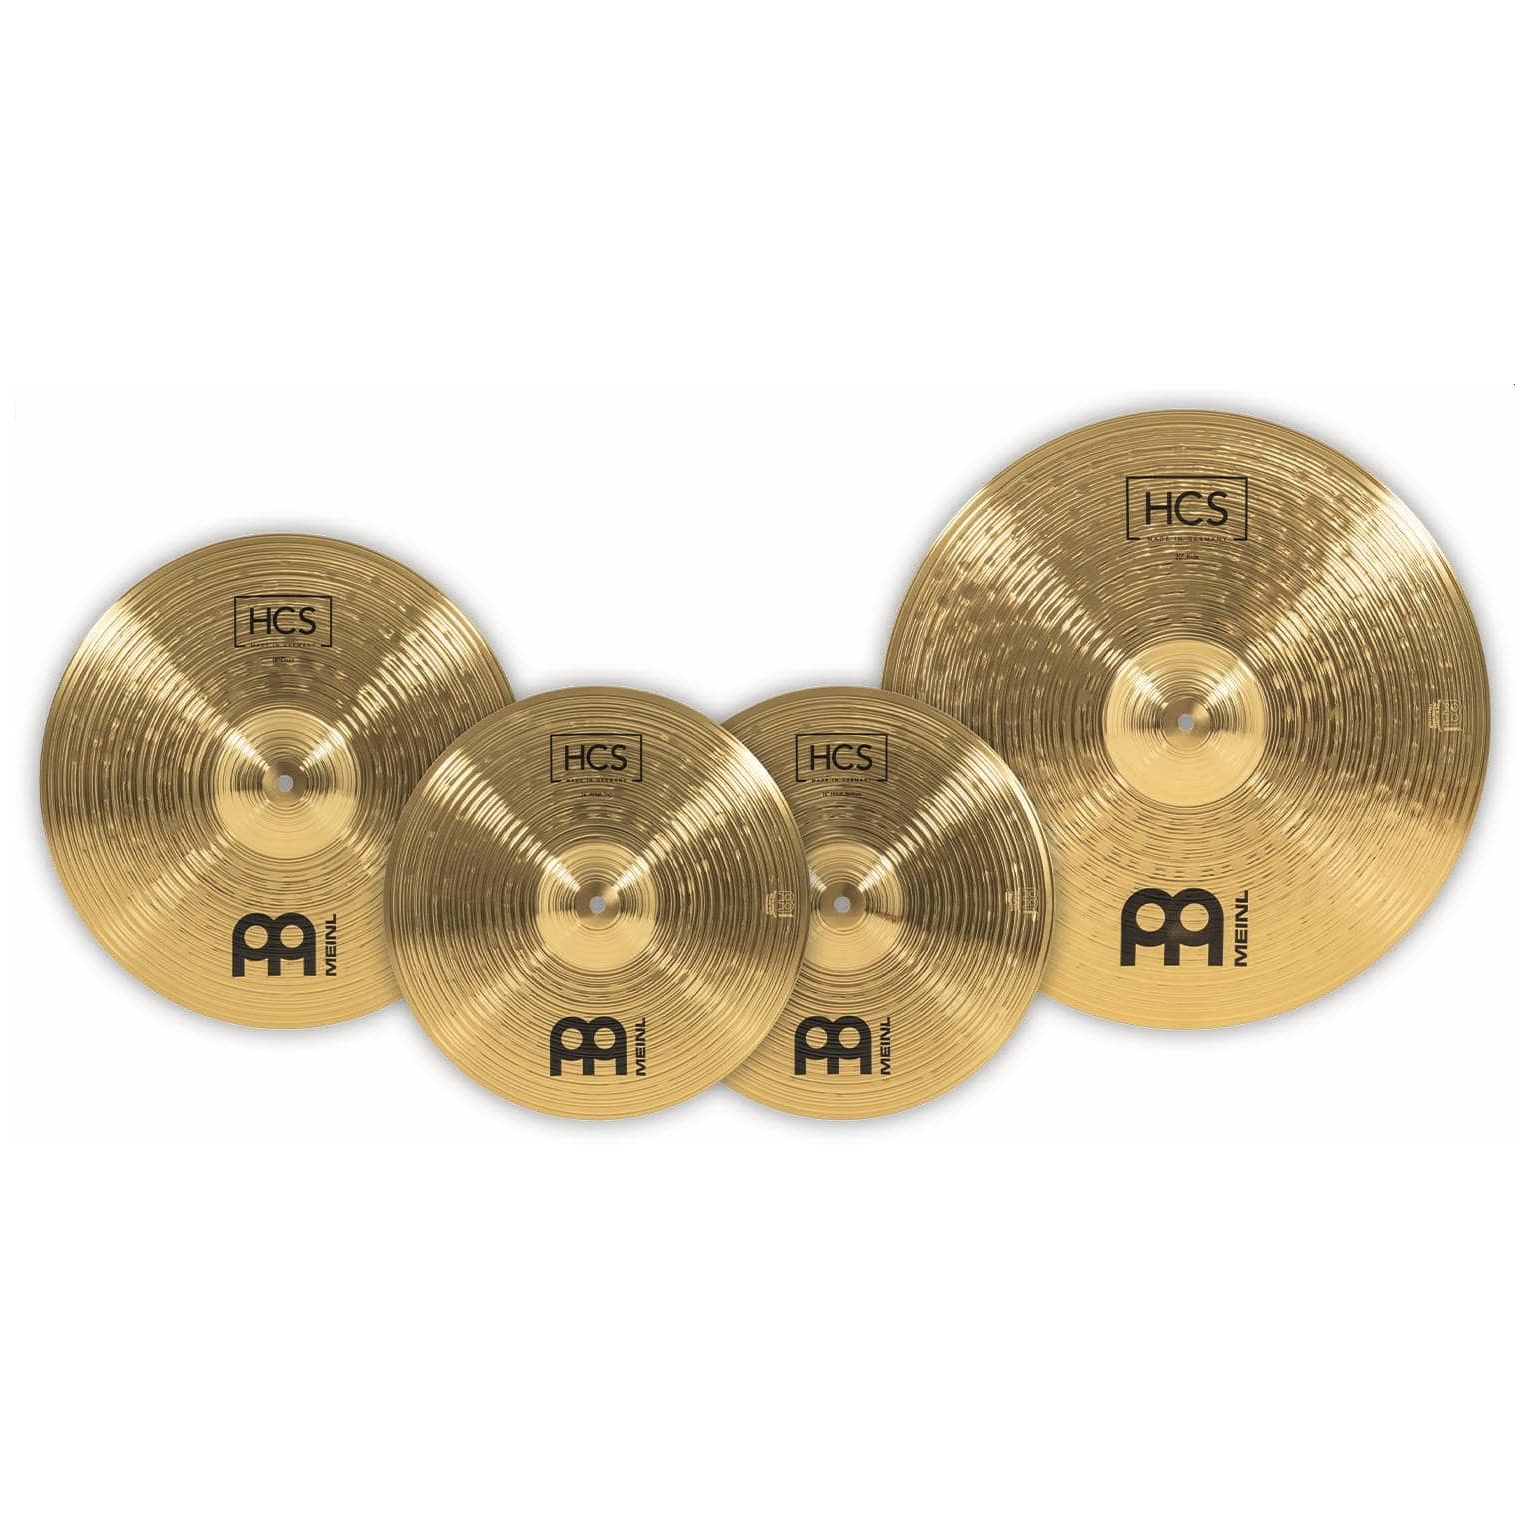 Meinl Cymbals HCS141620 - HCS Complete Cymbal Set kaufen | Jetzt